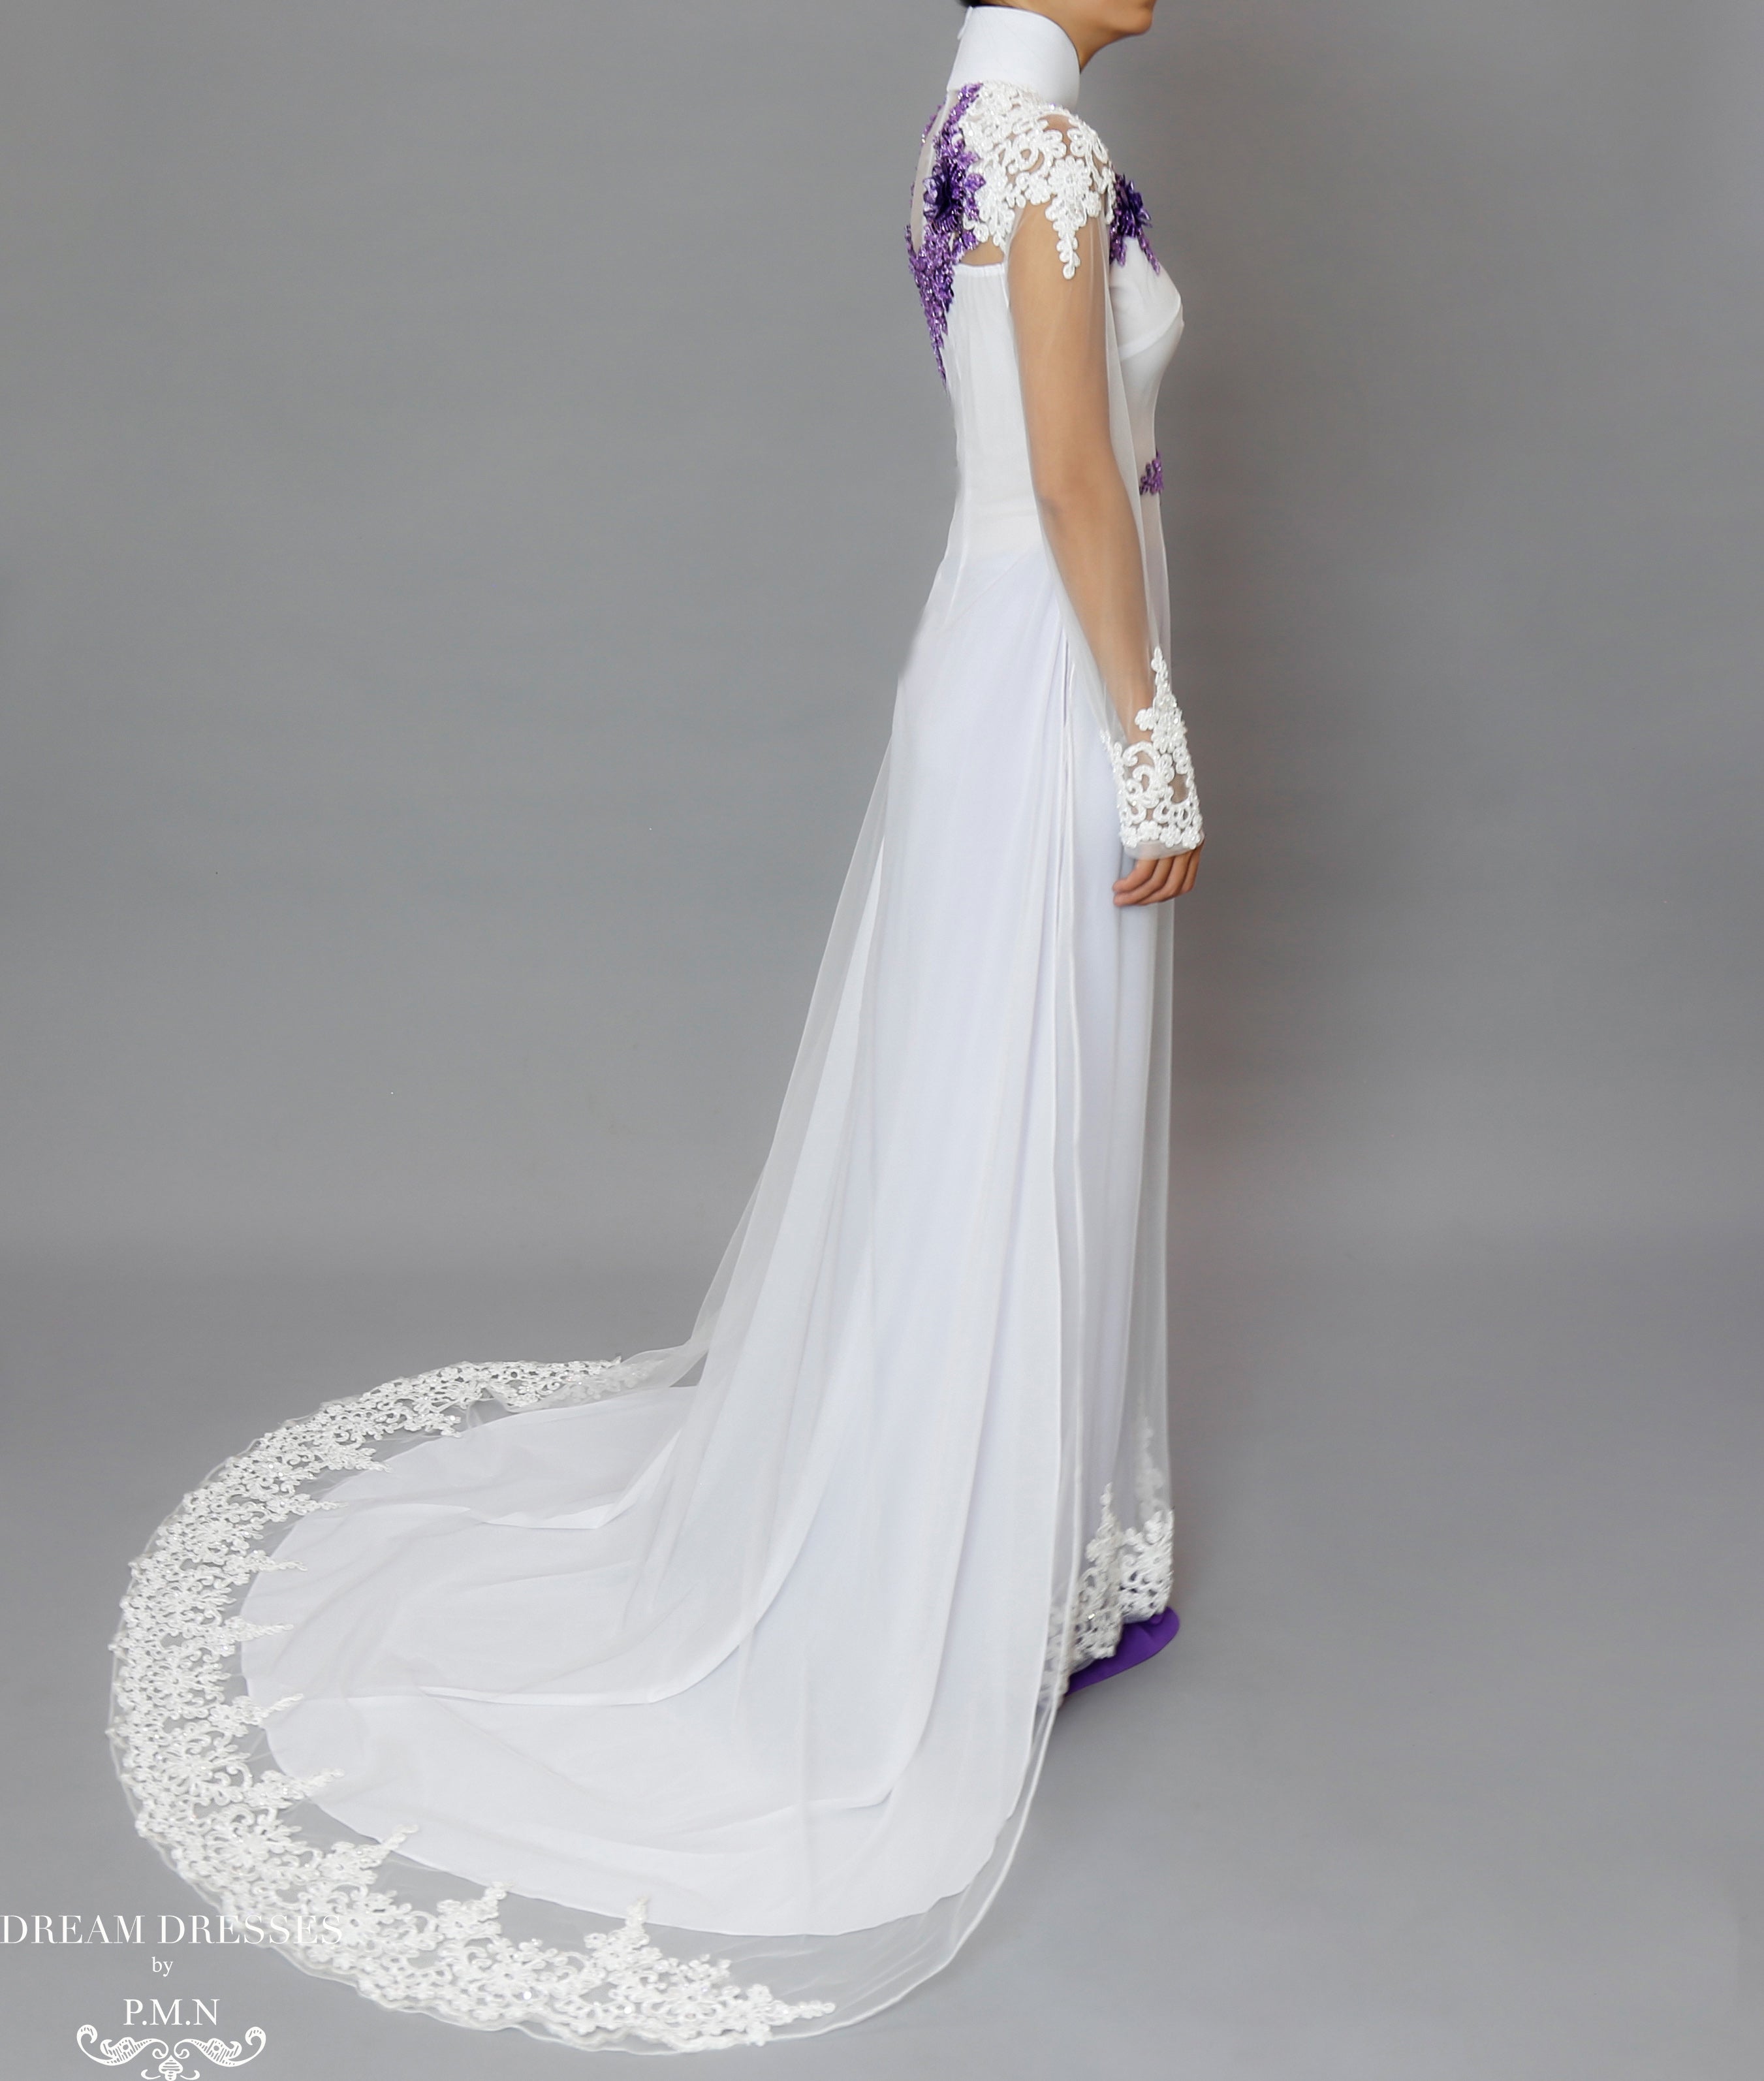 purple and white wedding dress